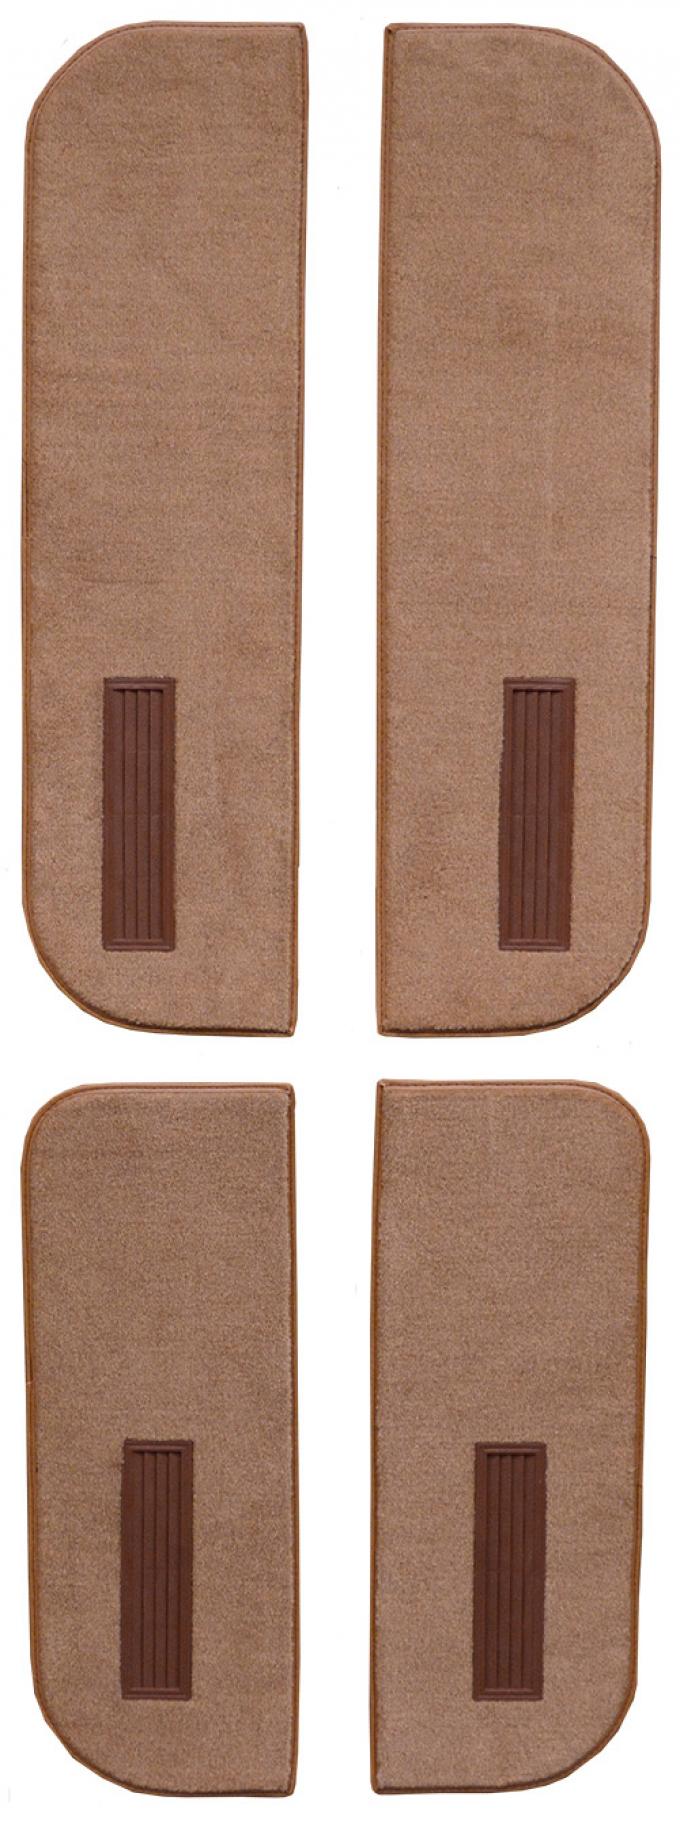 ACC 1973 Chevrolet C20 Suburban Door Panel Inserts on Cardboard w/Vents 4pc Loop Carpet